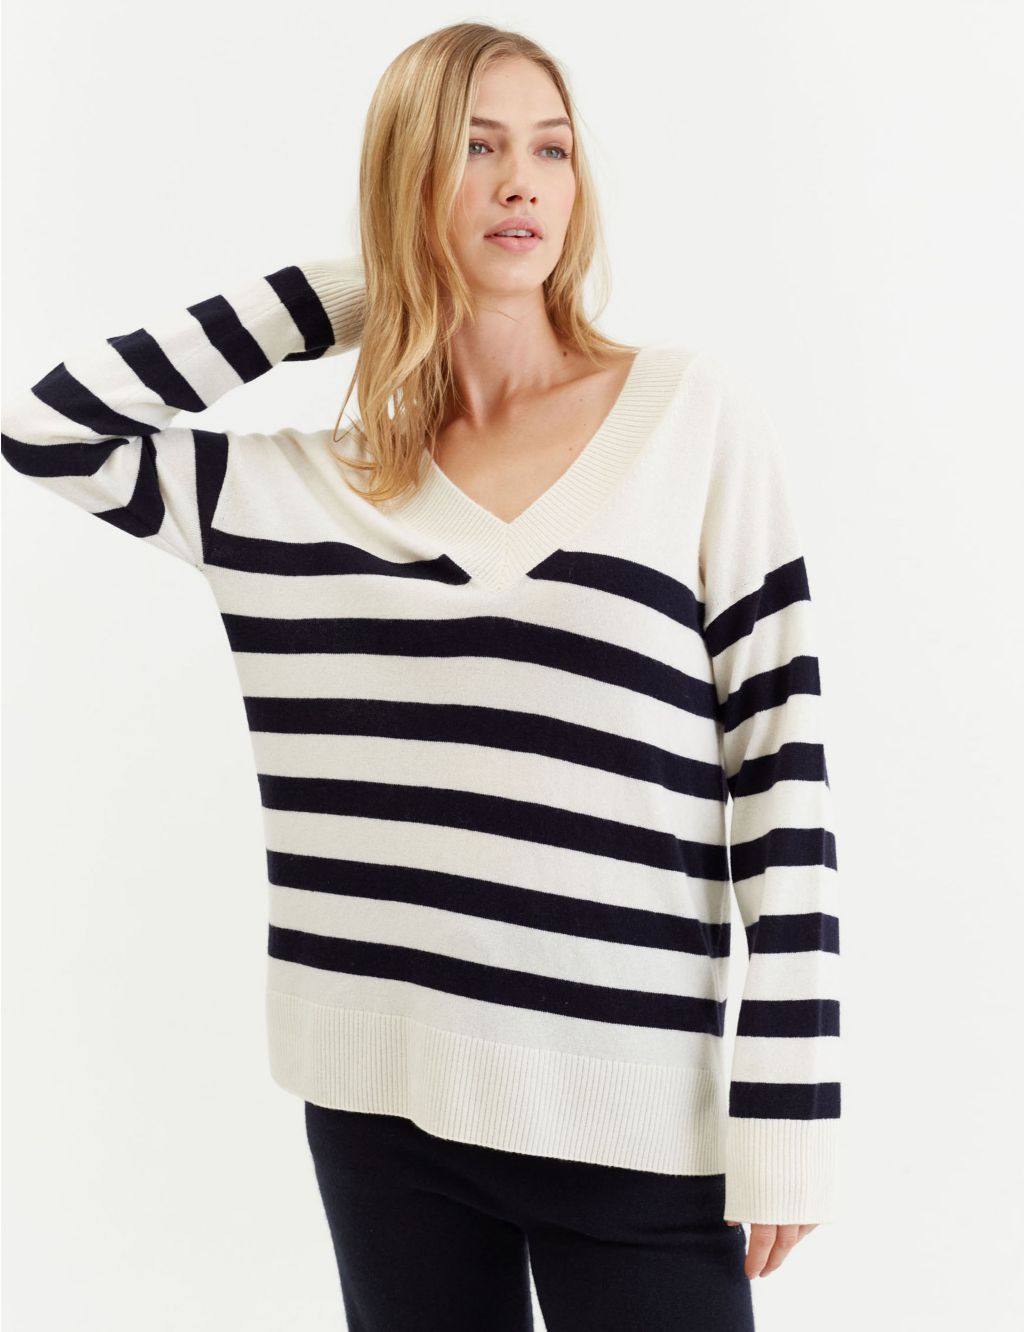 Wool Rich Striped V-Neck Sweatshirt image 1